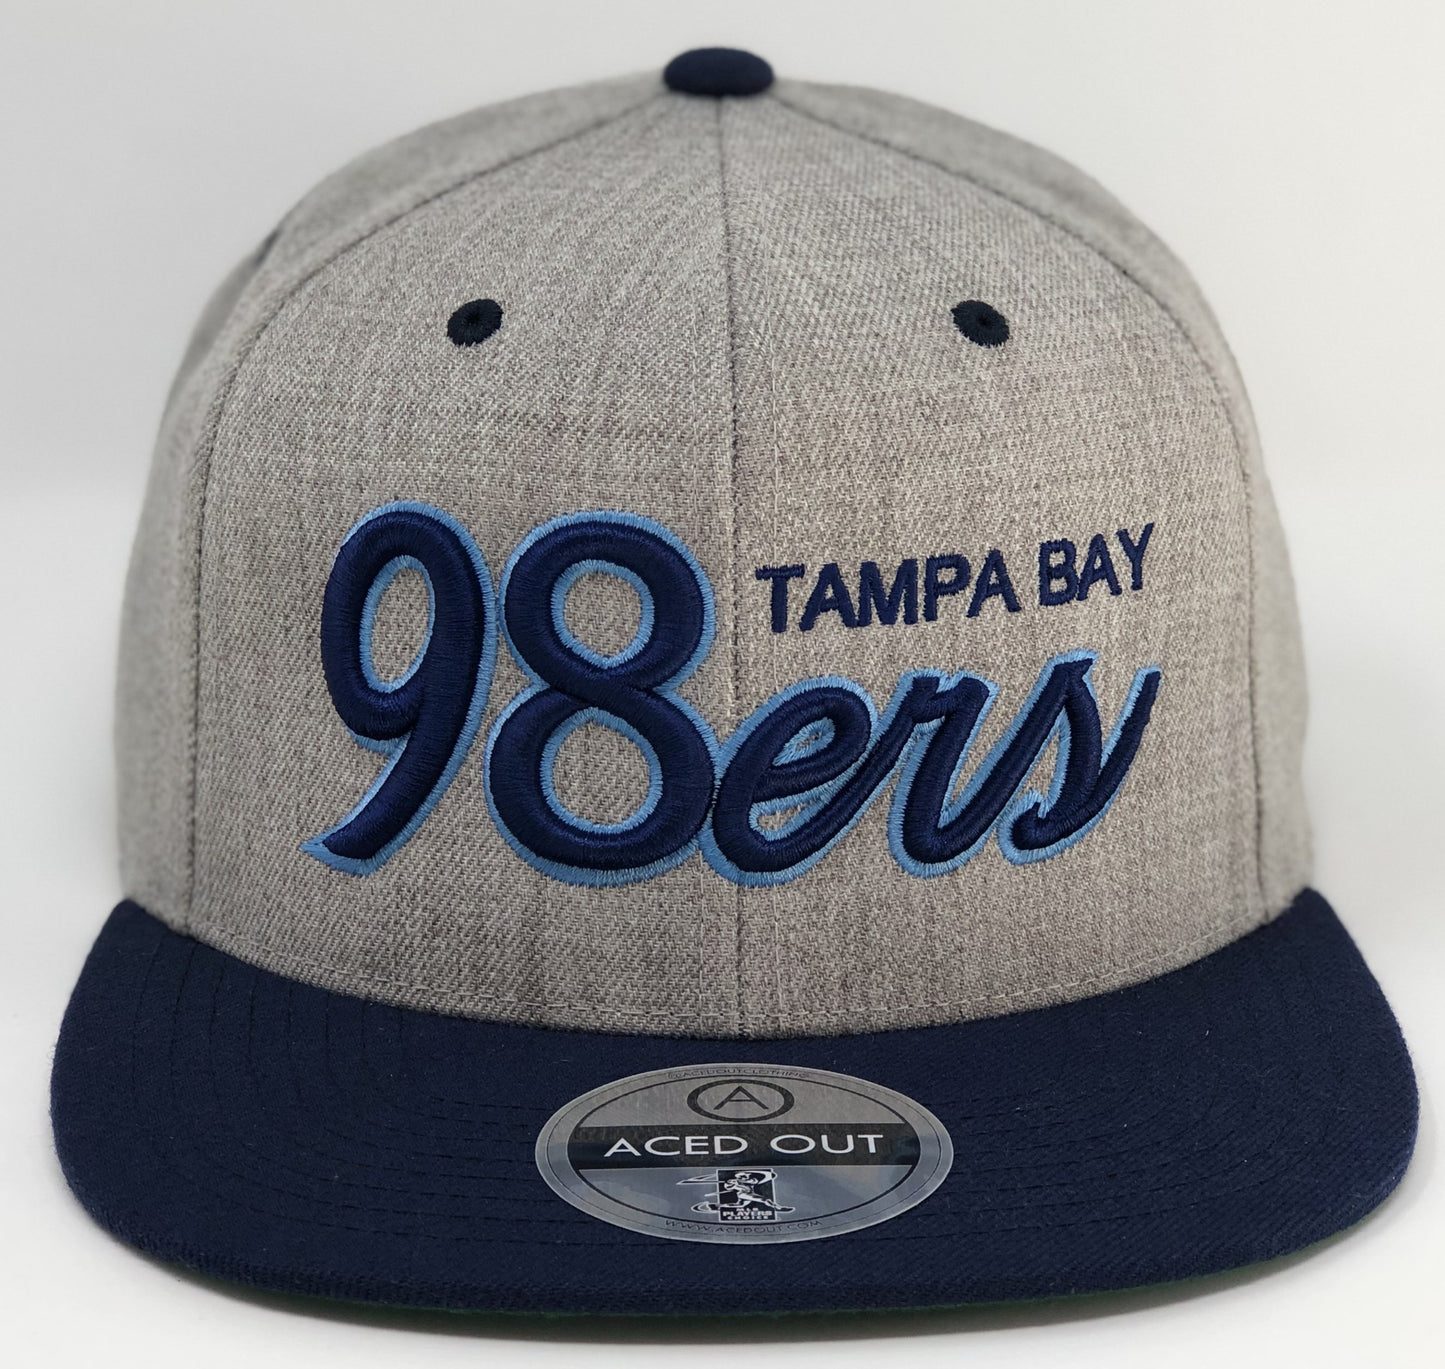 Tampa Bay 98ers Cap - Grey/Navy Snapback